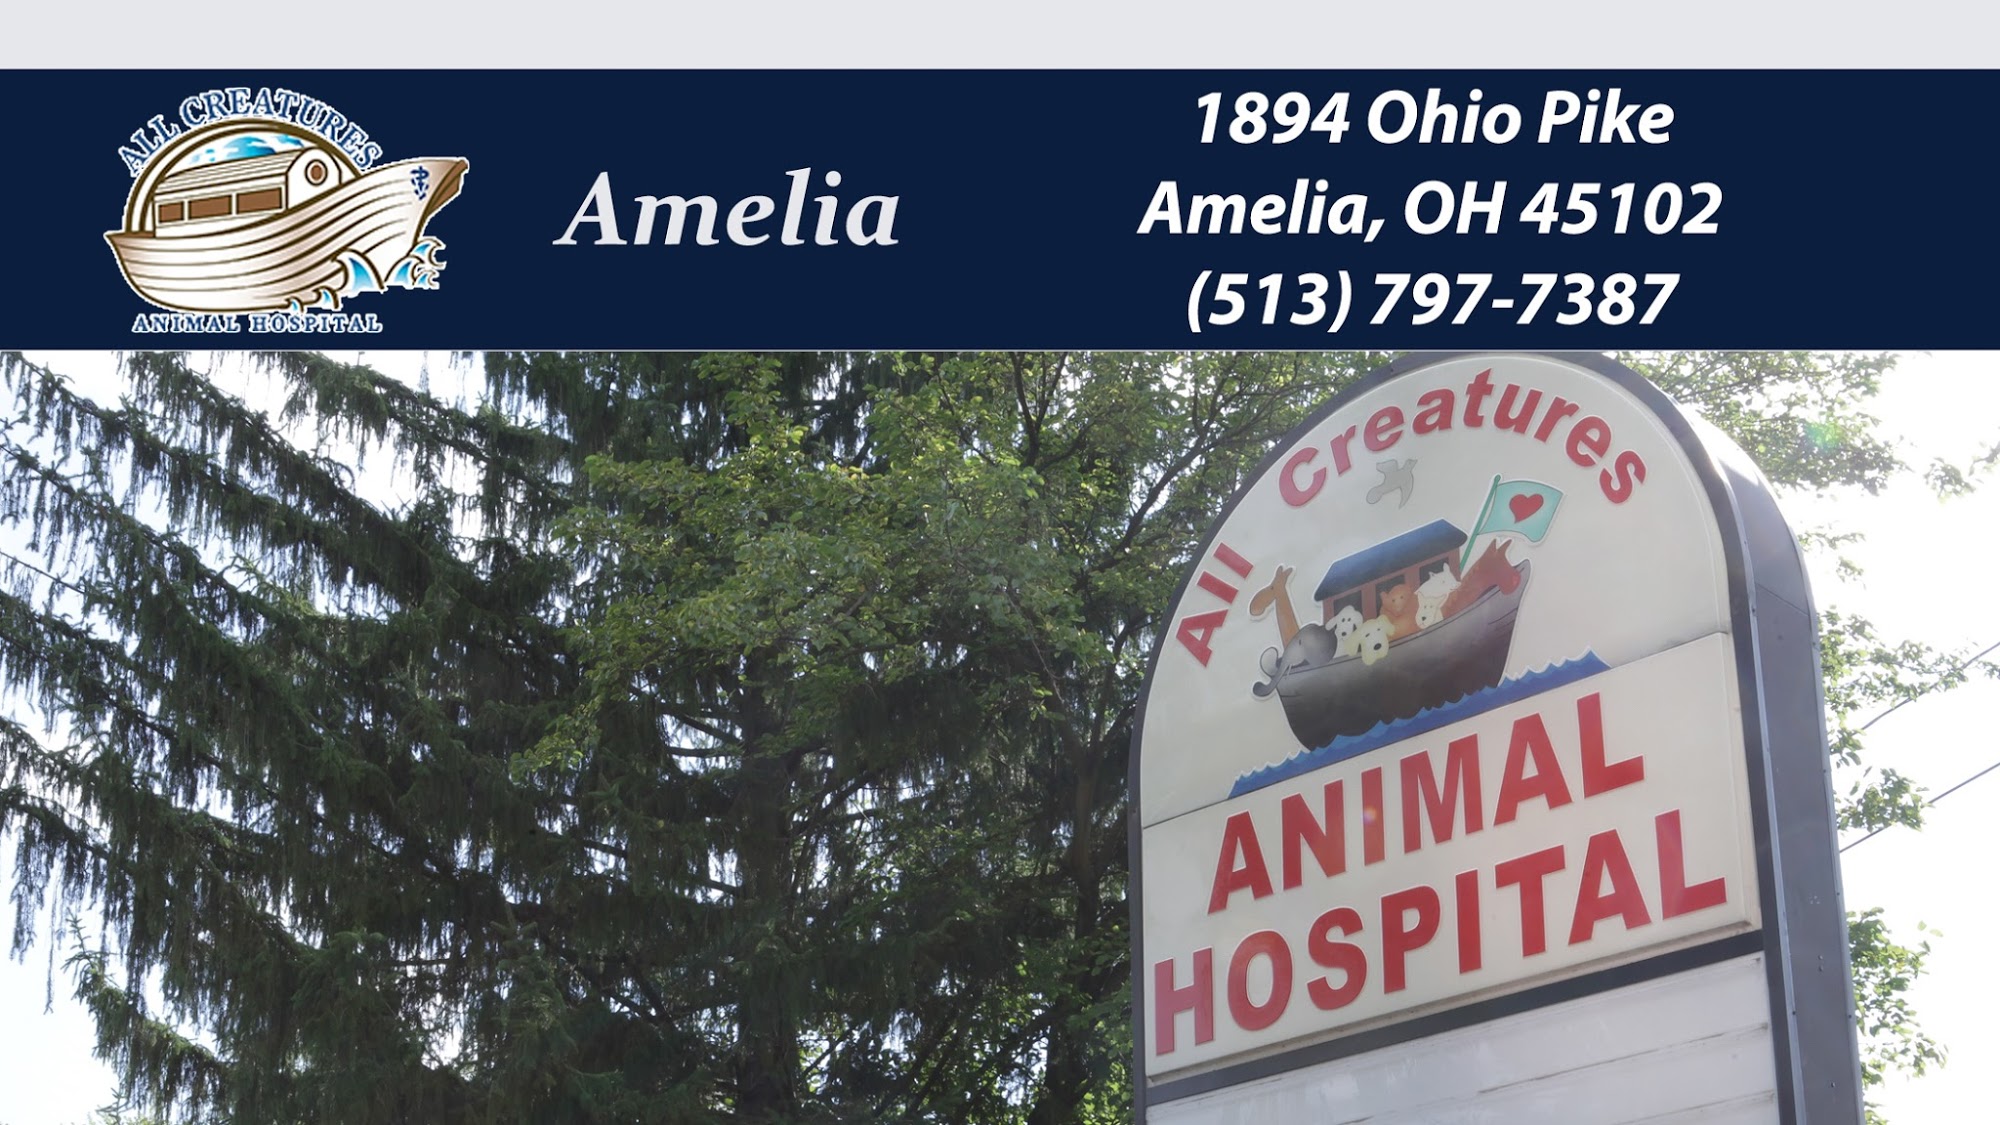 All Creatures Animal Hospital - Amelia